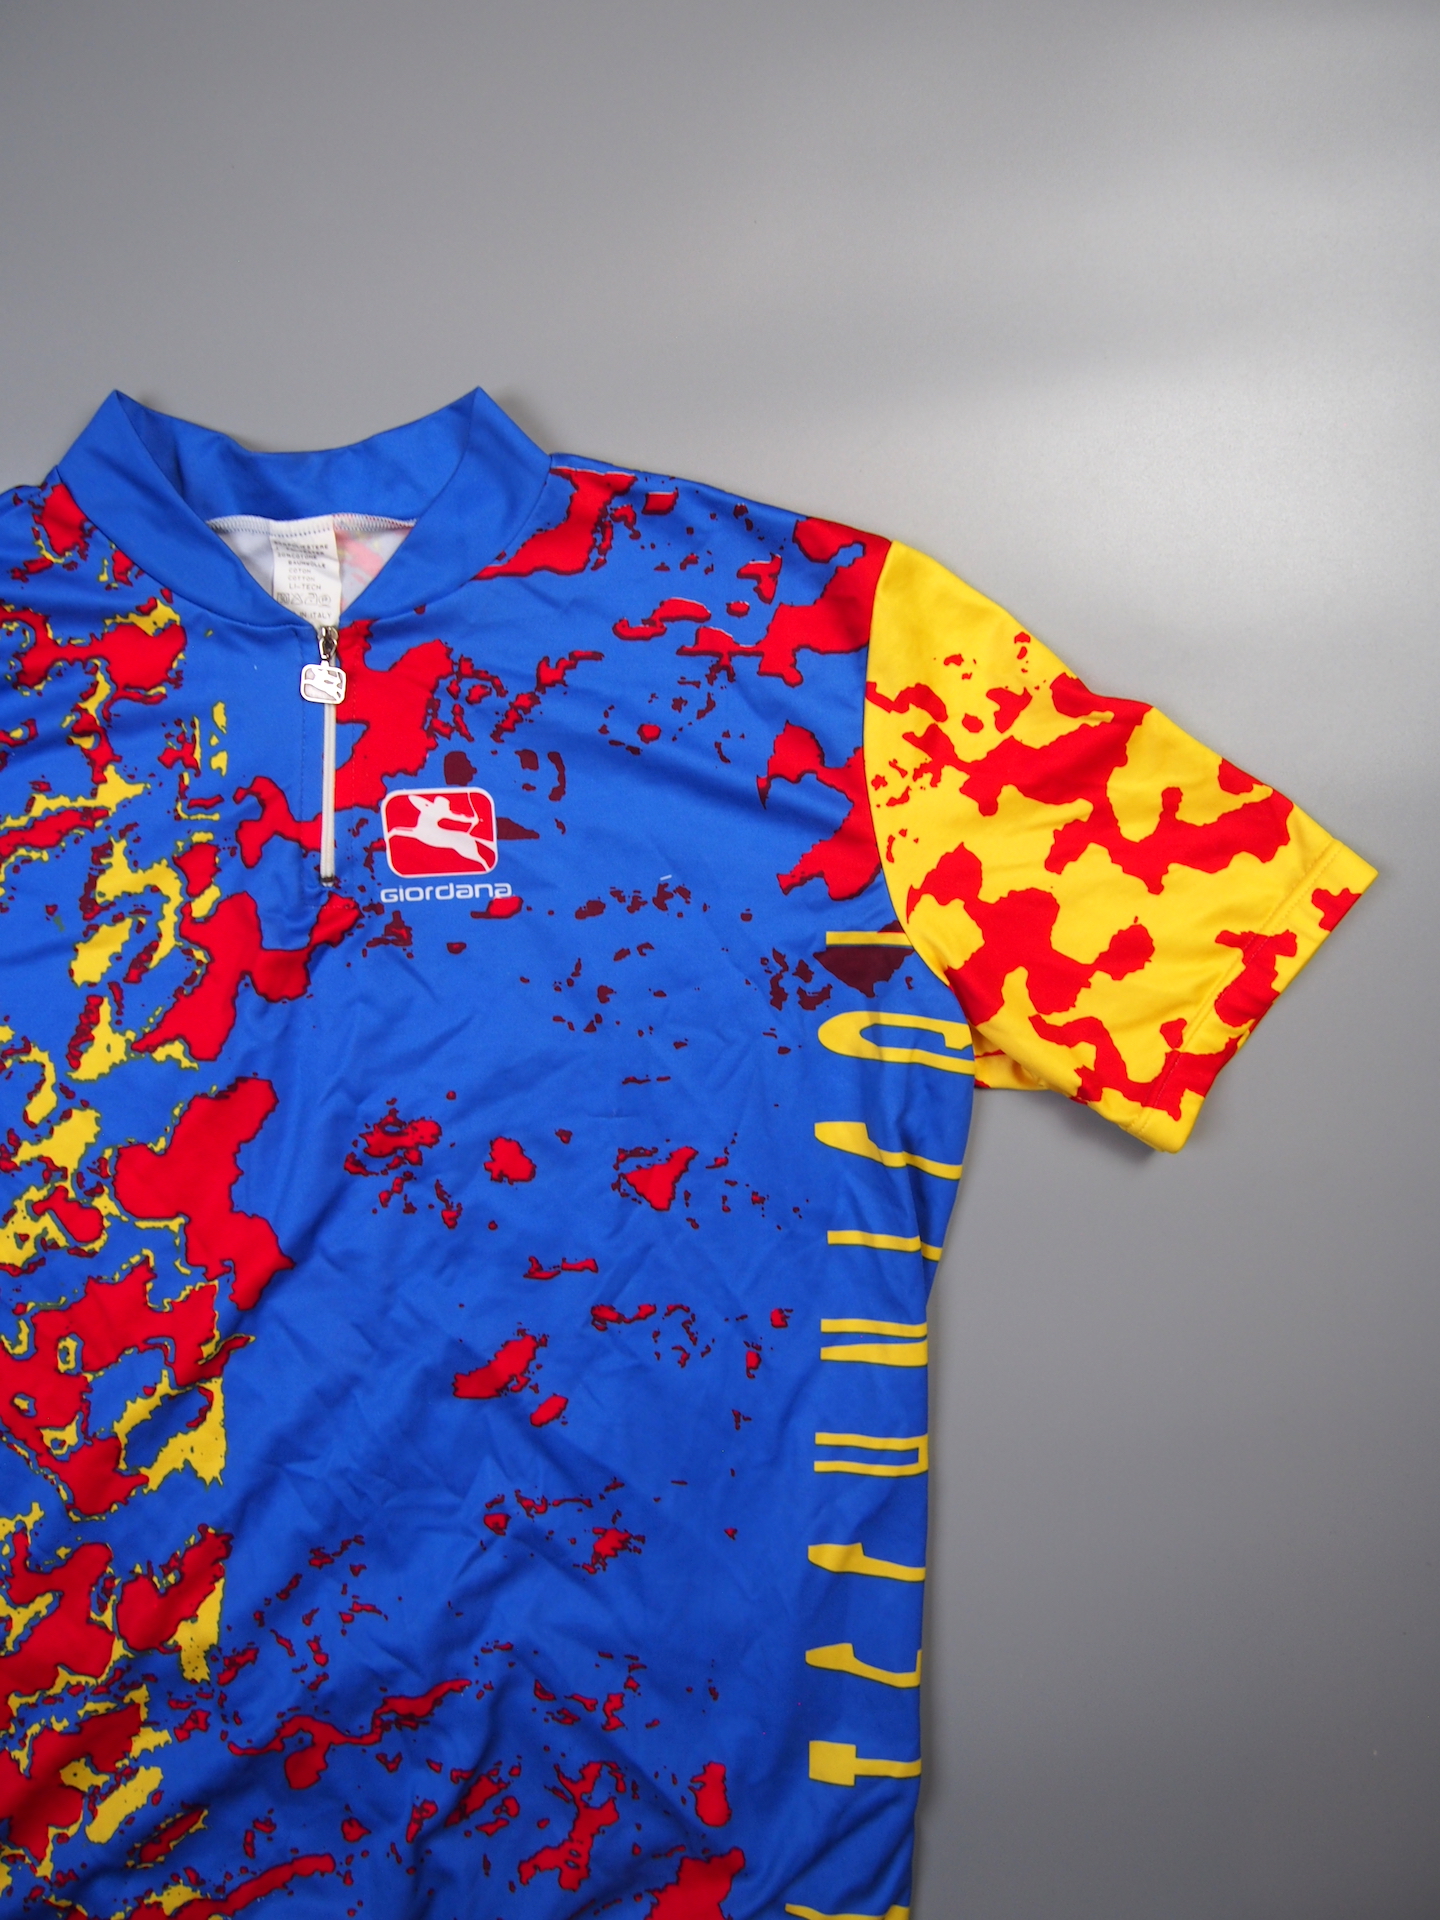 Giordana Splatter Short Sleeved jersey – Blue, Red & Yellow